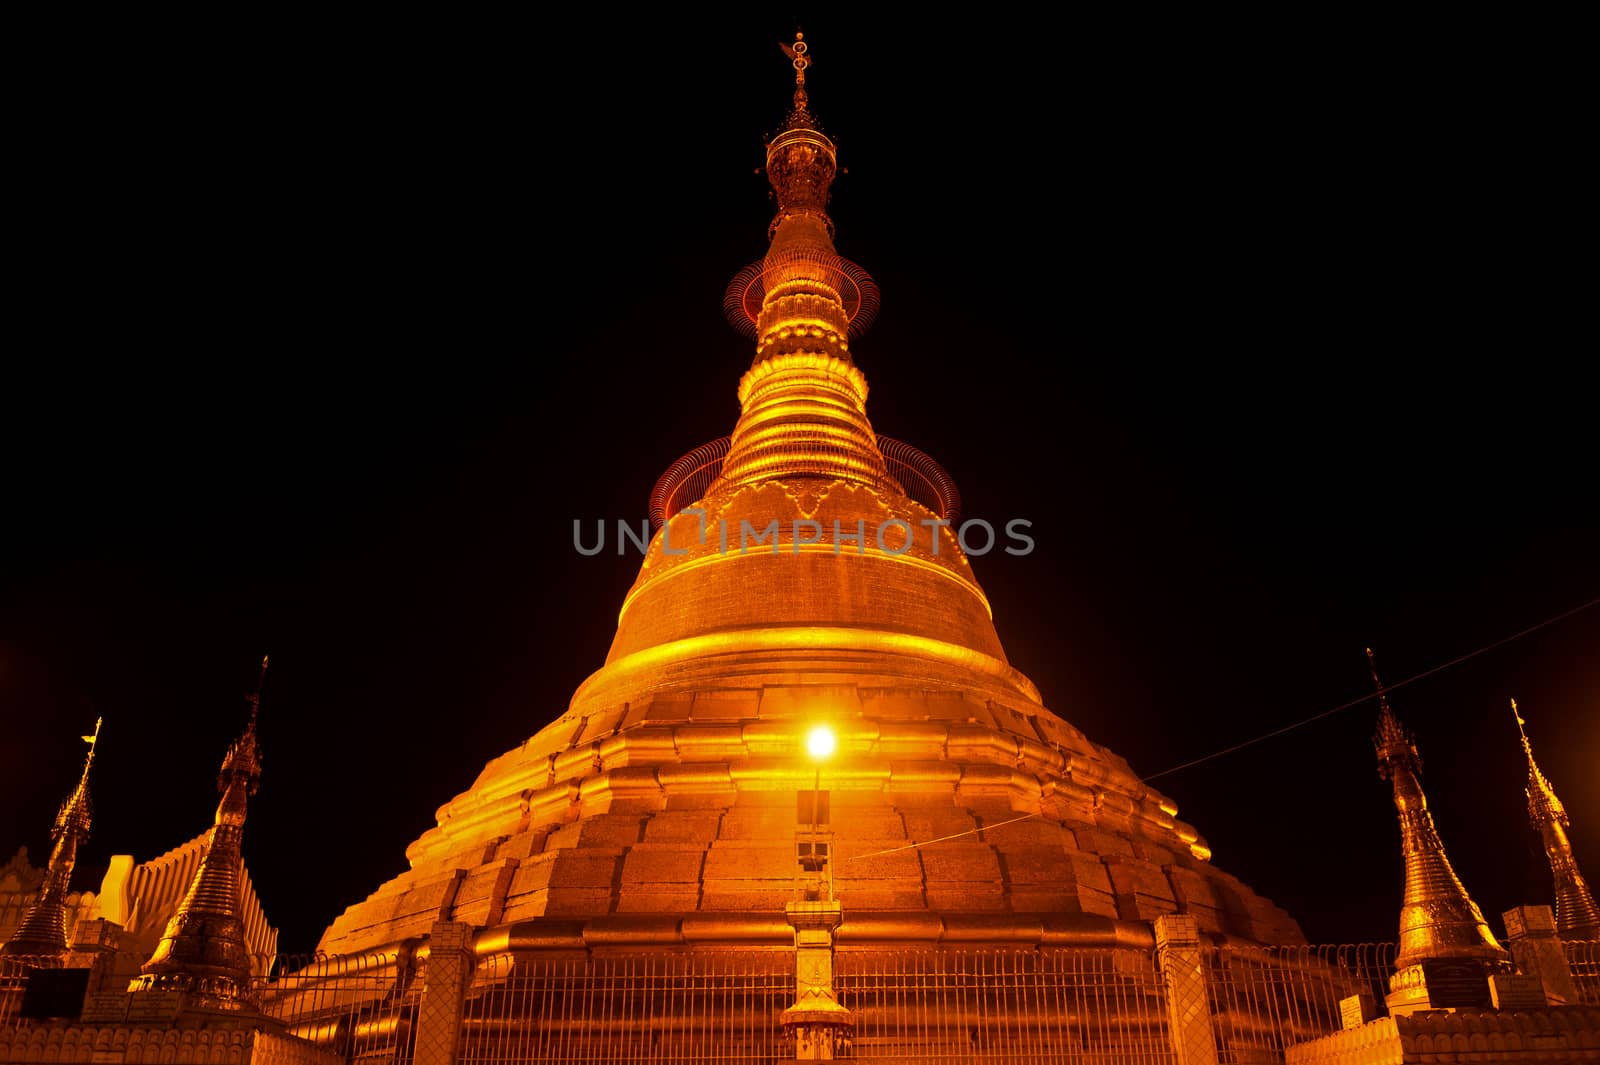 Botataung paya Pagoda in Rangoon, Myanmar by think4photop